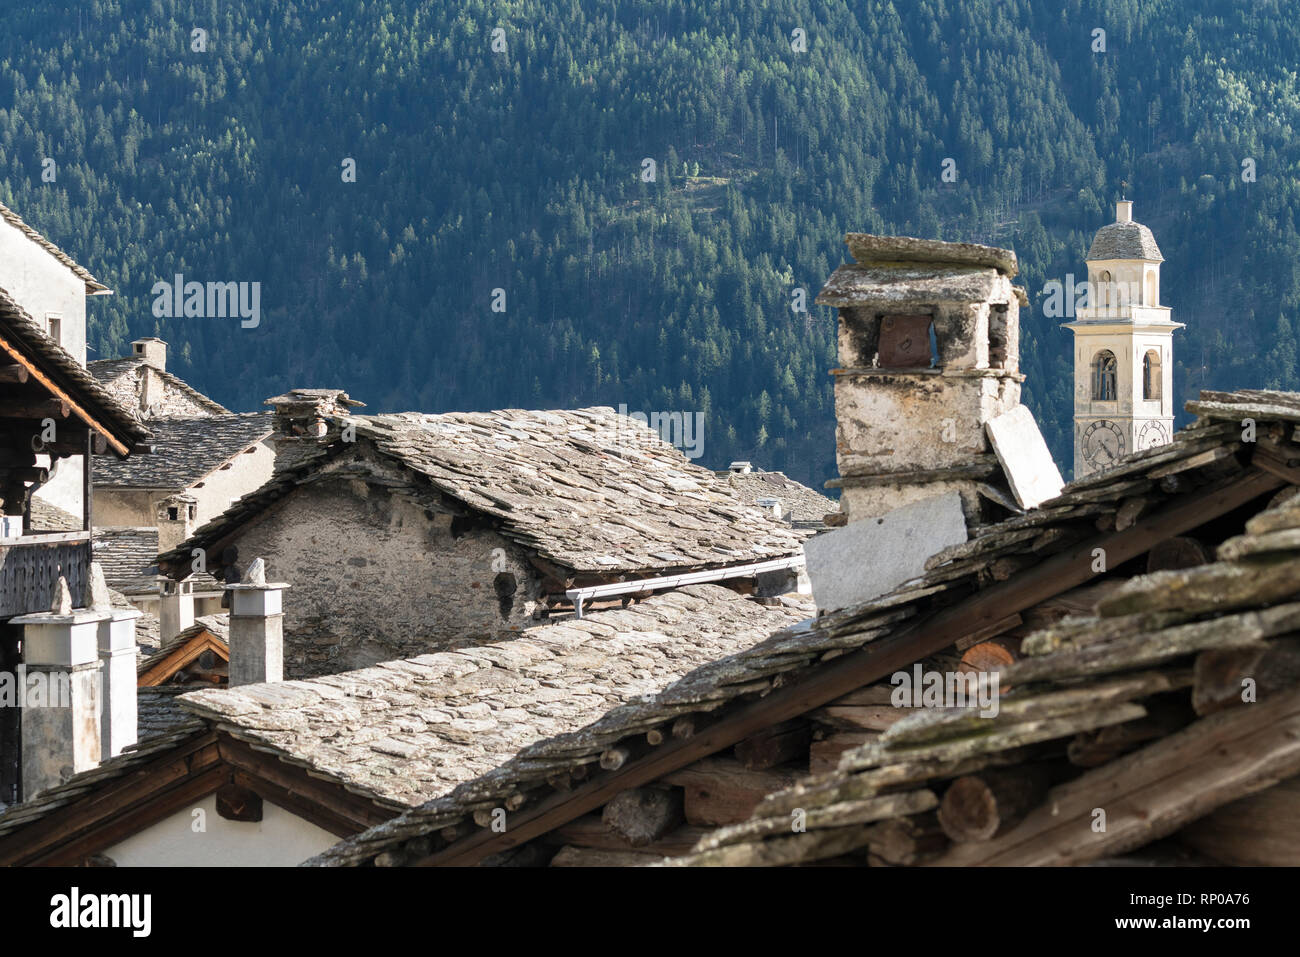 Stone roofs of traditional houses, Soglio, Bregaglia Valley, Maloja Region, Canton of Graubunden, Switzerland Stock Photo